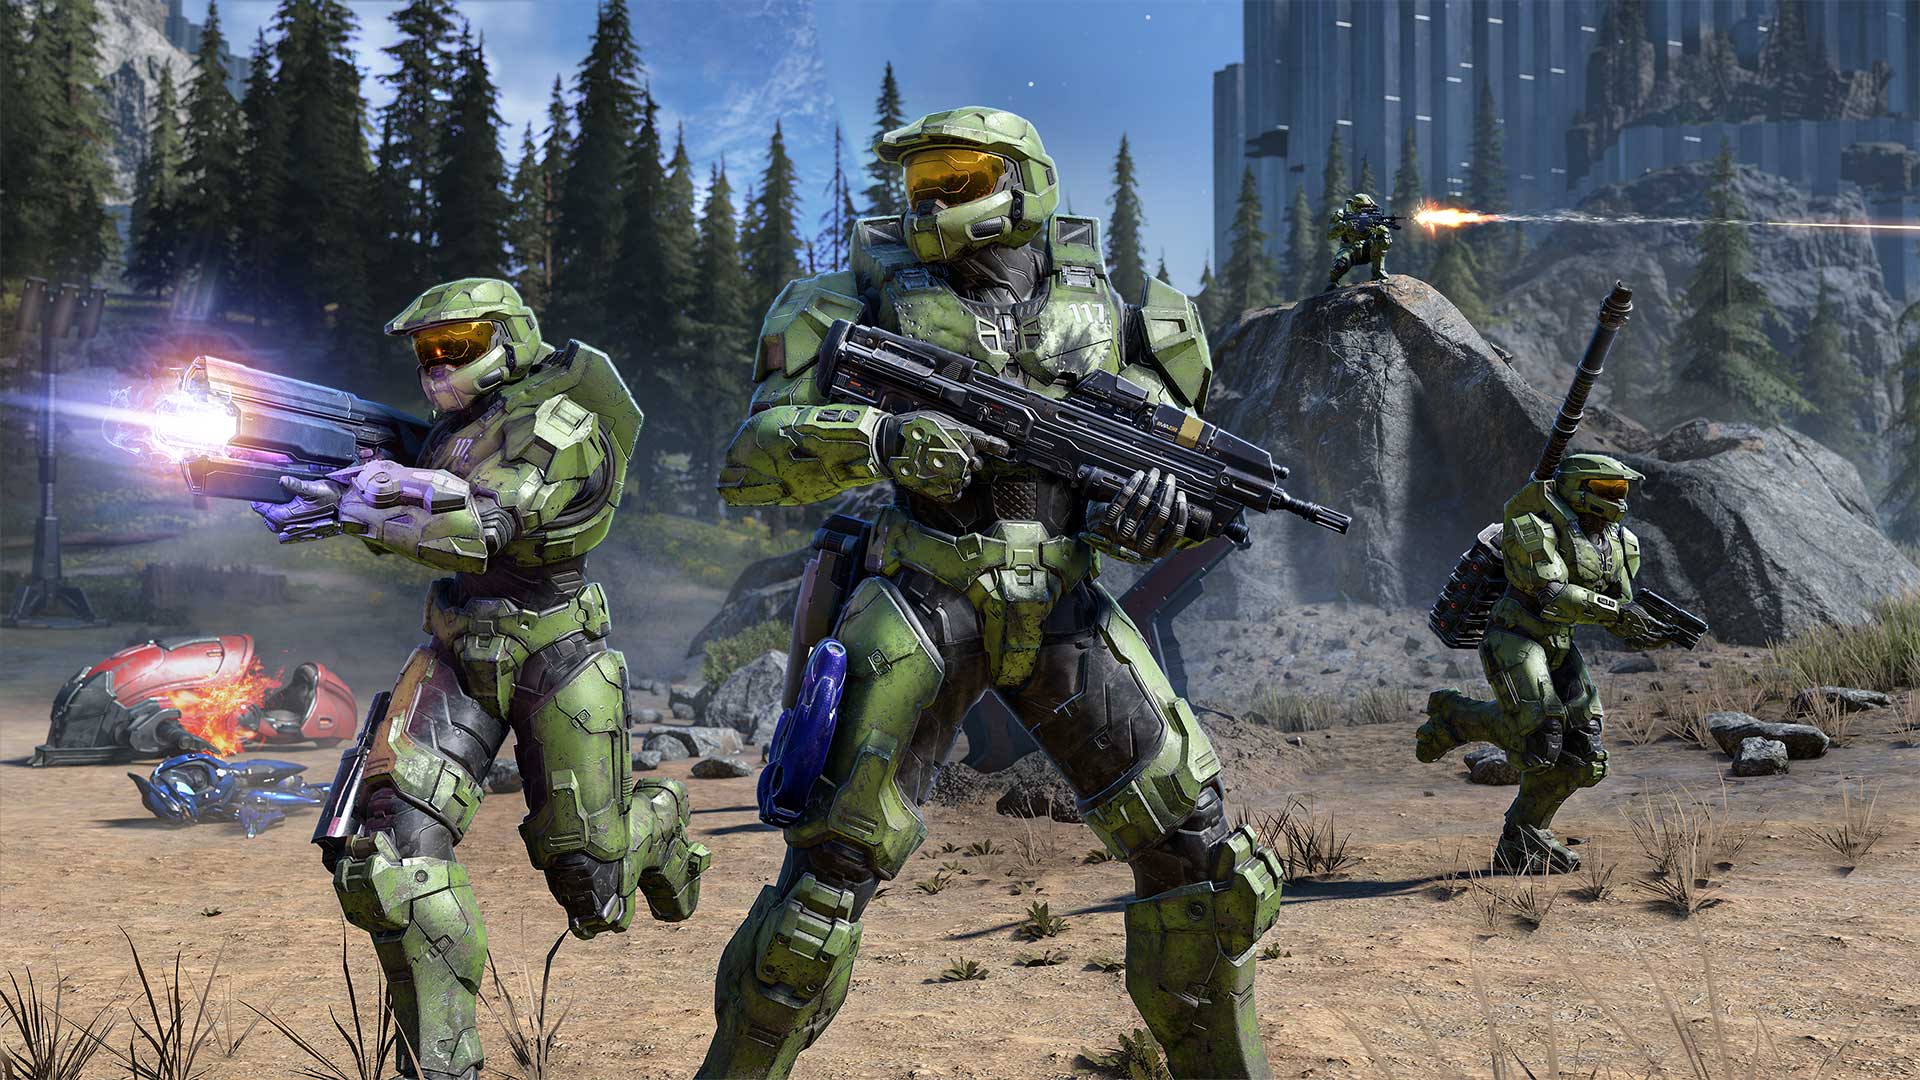 Halo usará a Unreal Engine para futuros lançamentos 2022 Viciados